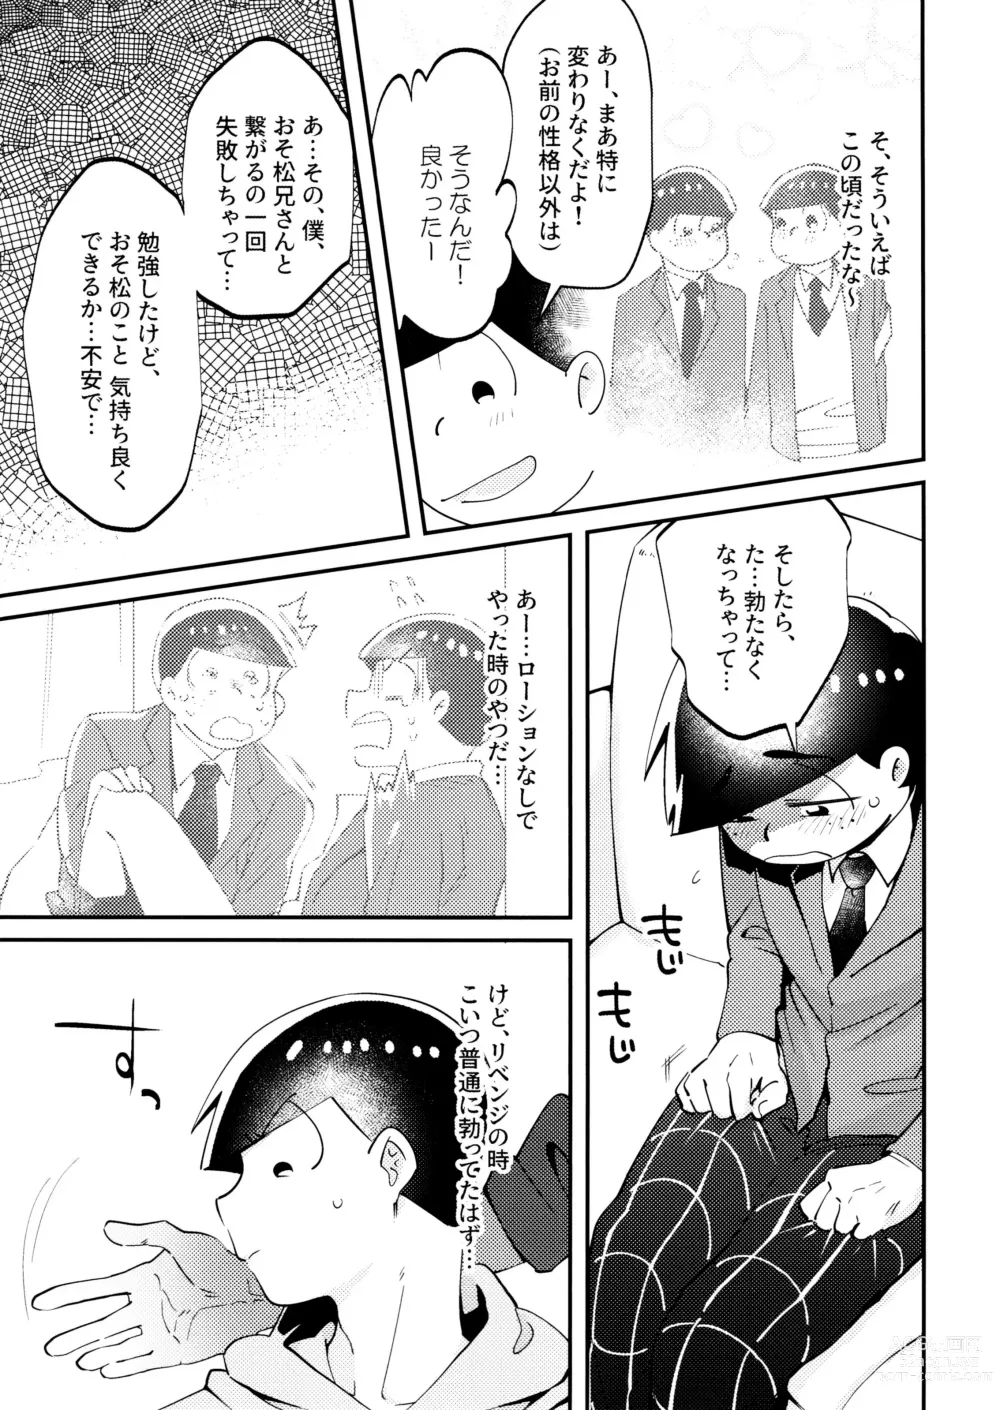 Page 6 of doujinshi Cherry boy END